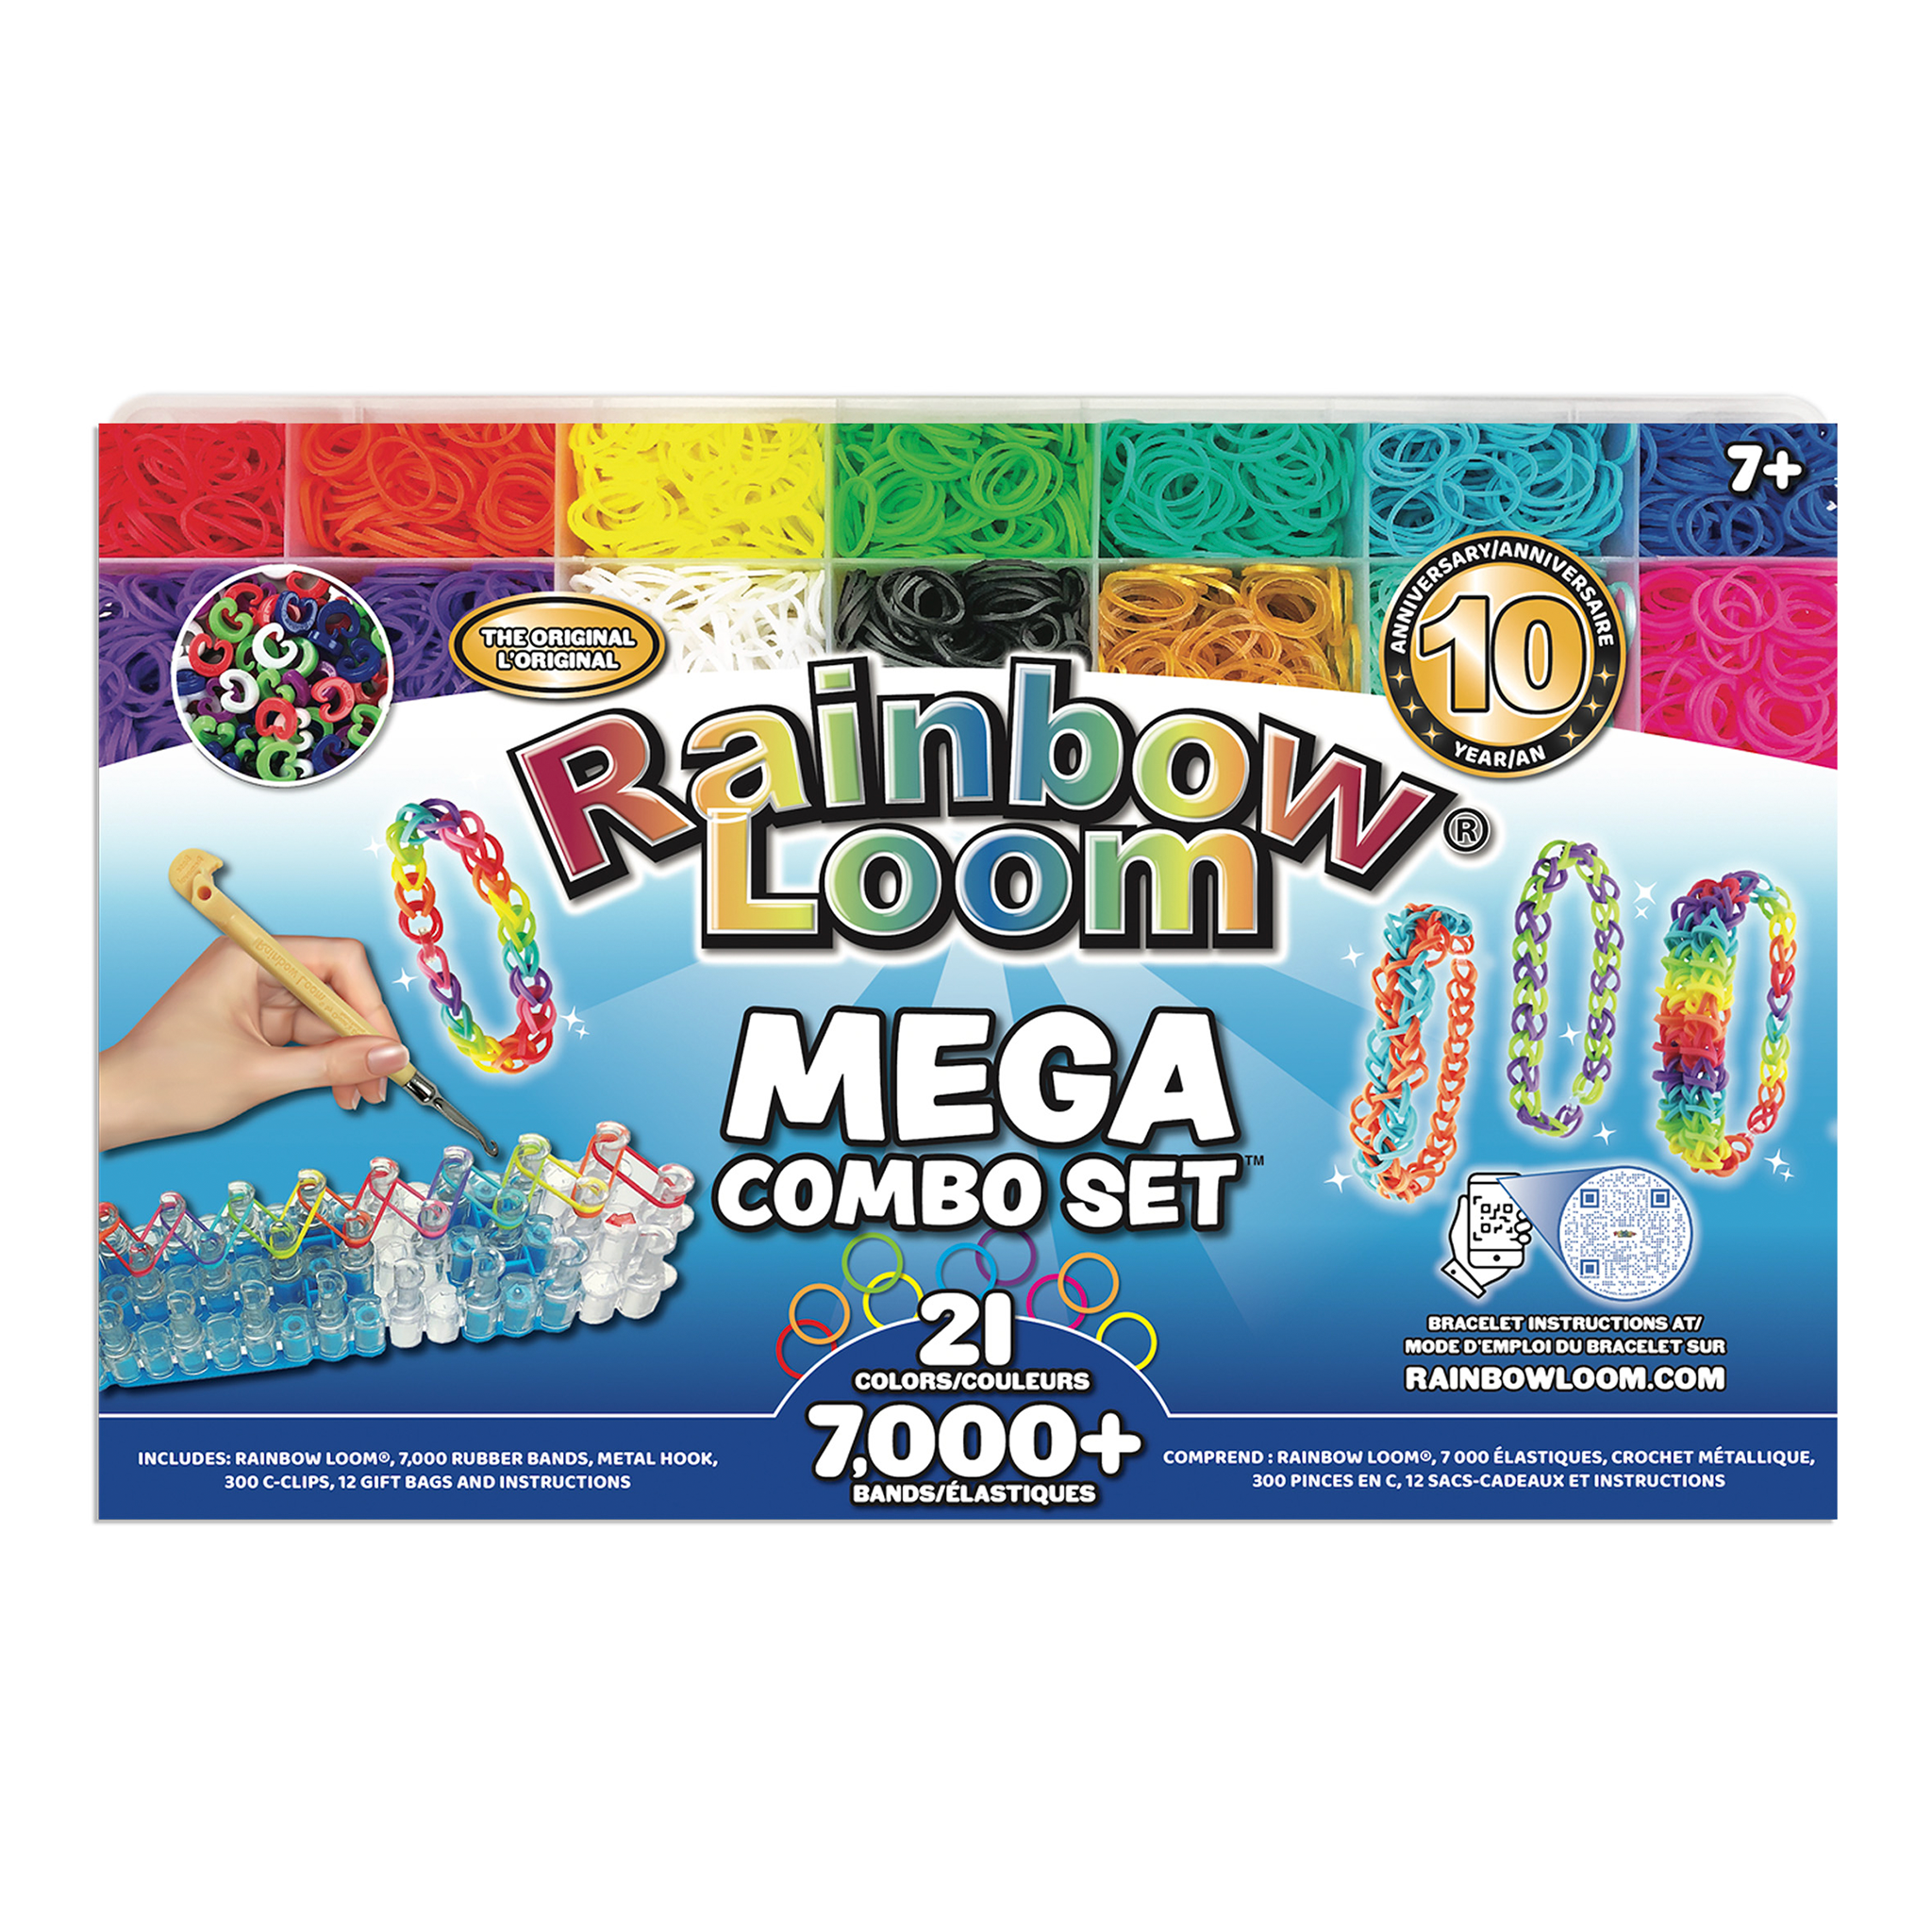 5 Assorted Packs of Rainbow Loom bands - Building Blocks